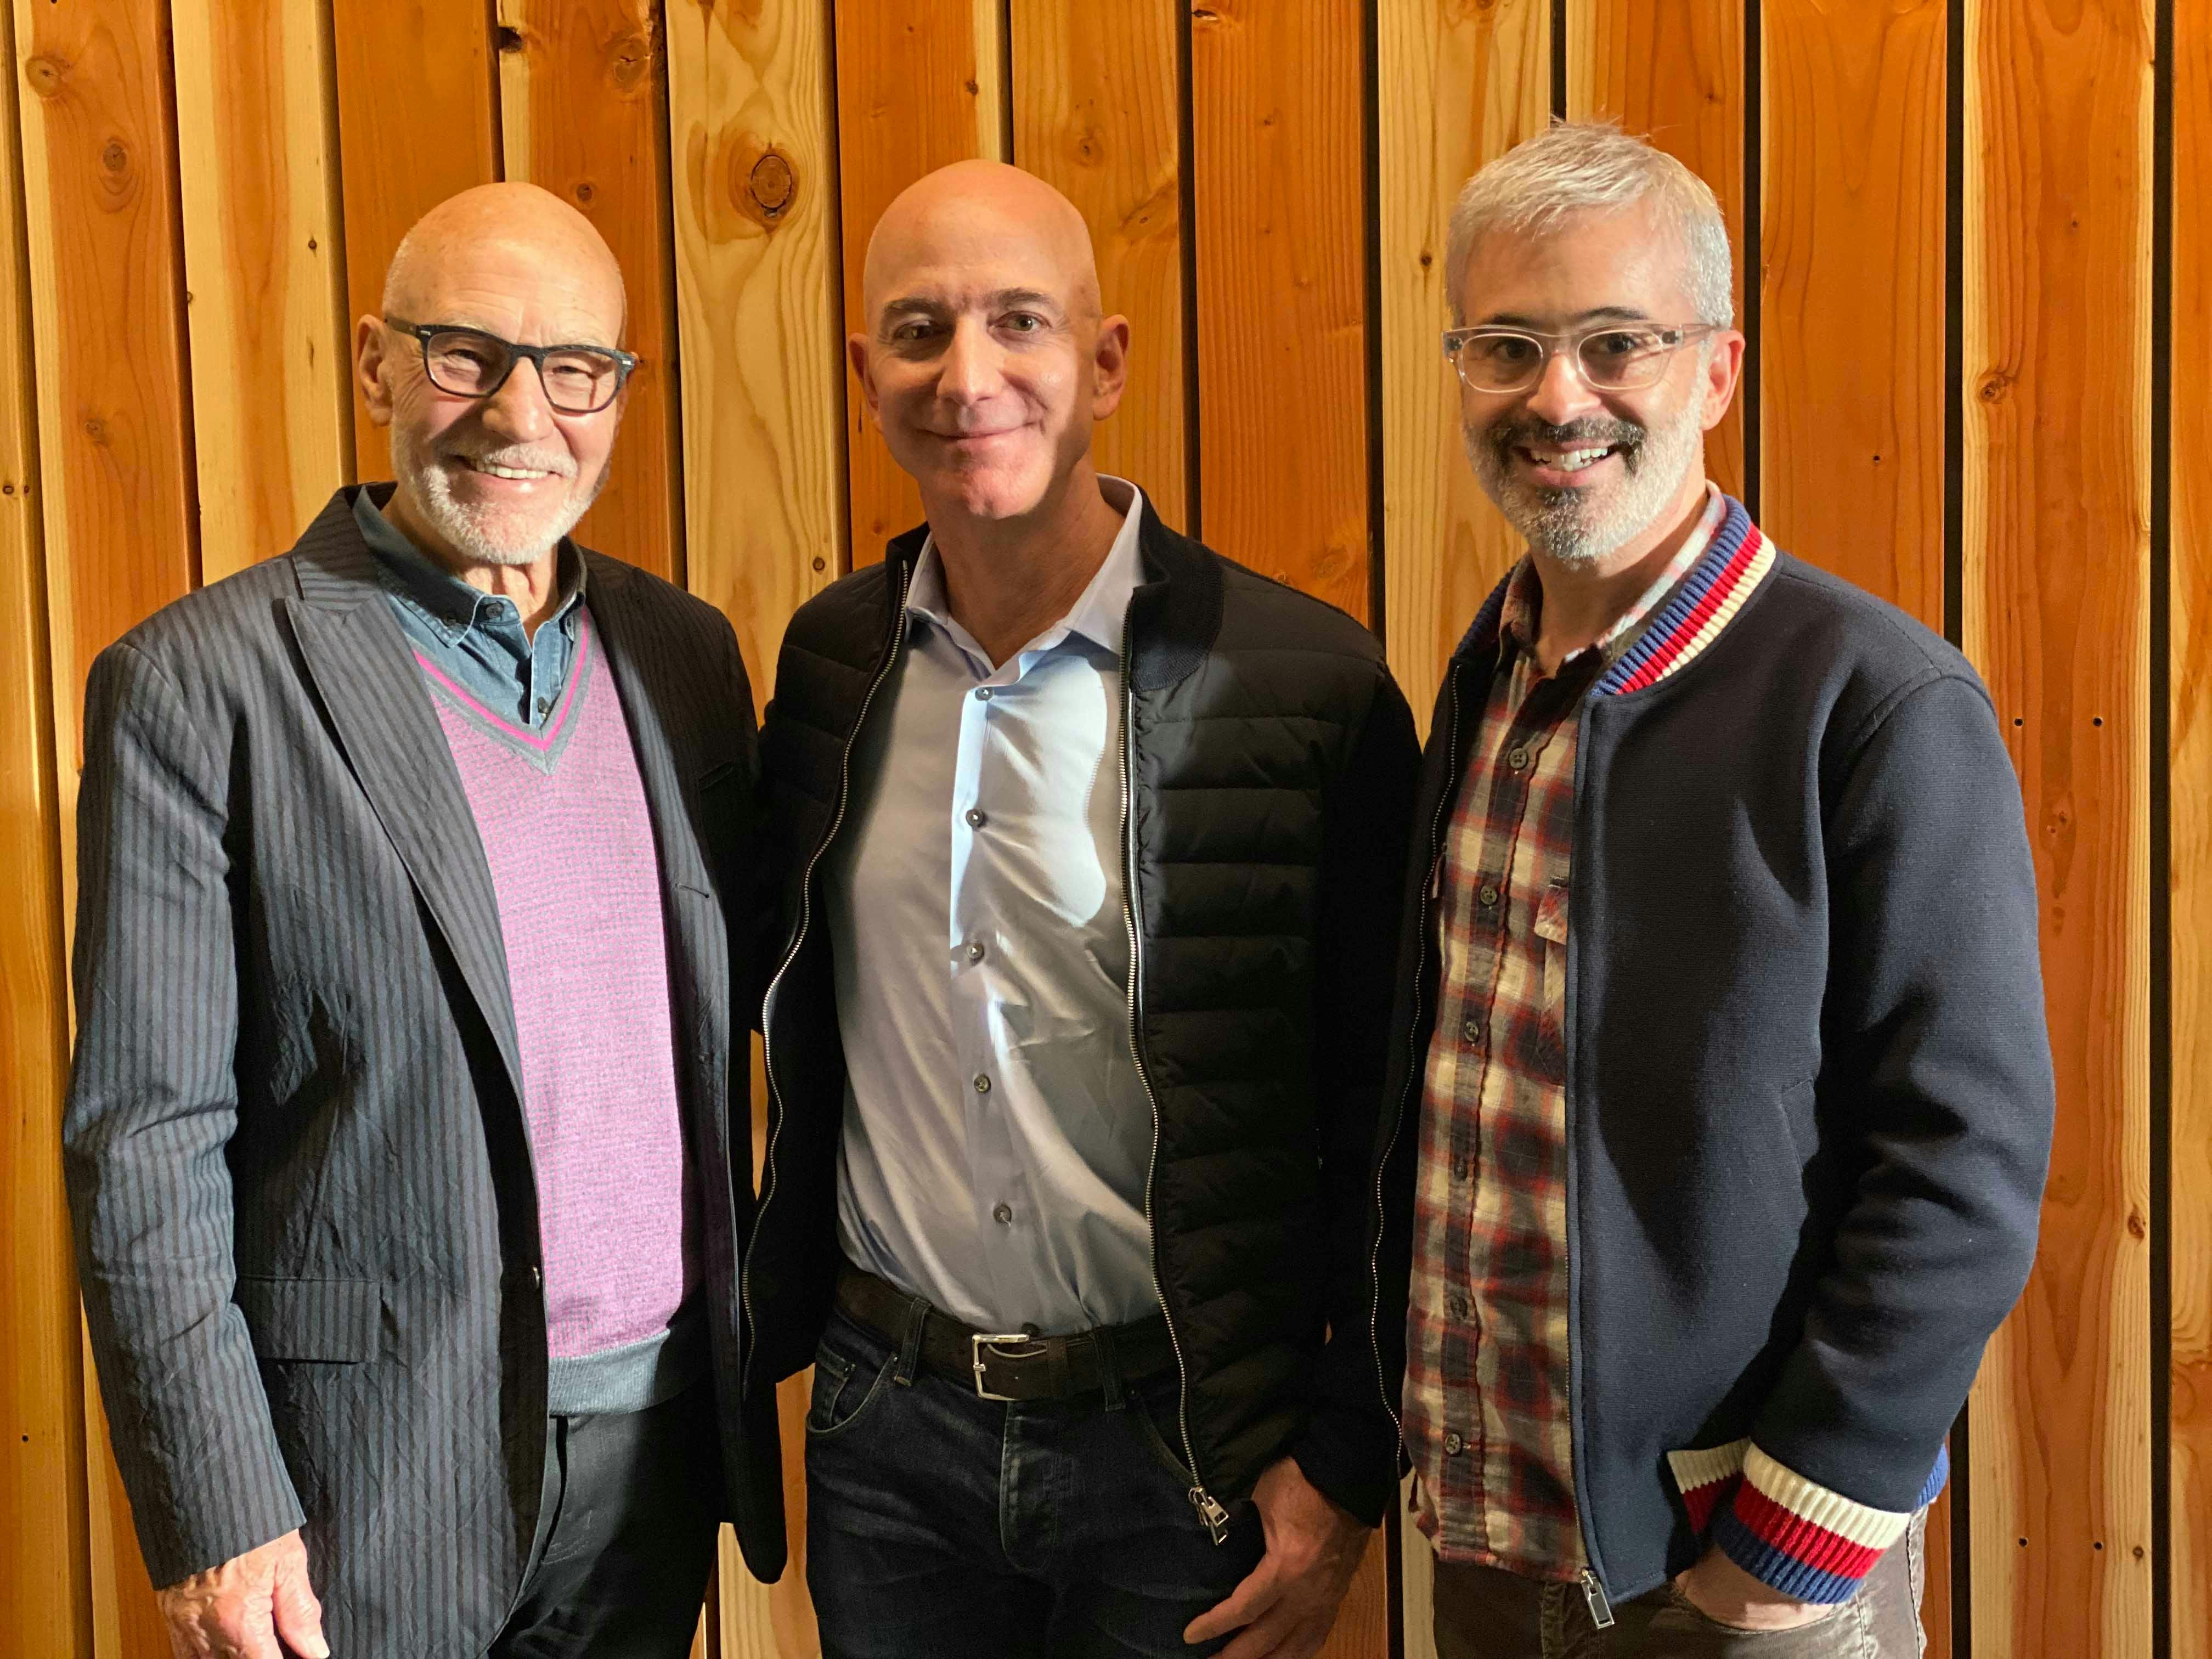 Sir Patrick Stewart, Jeff Bezos and Alex Kurtzman